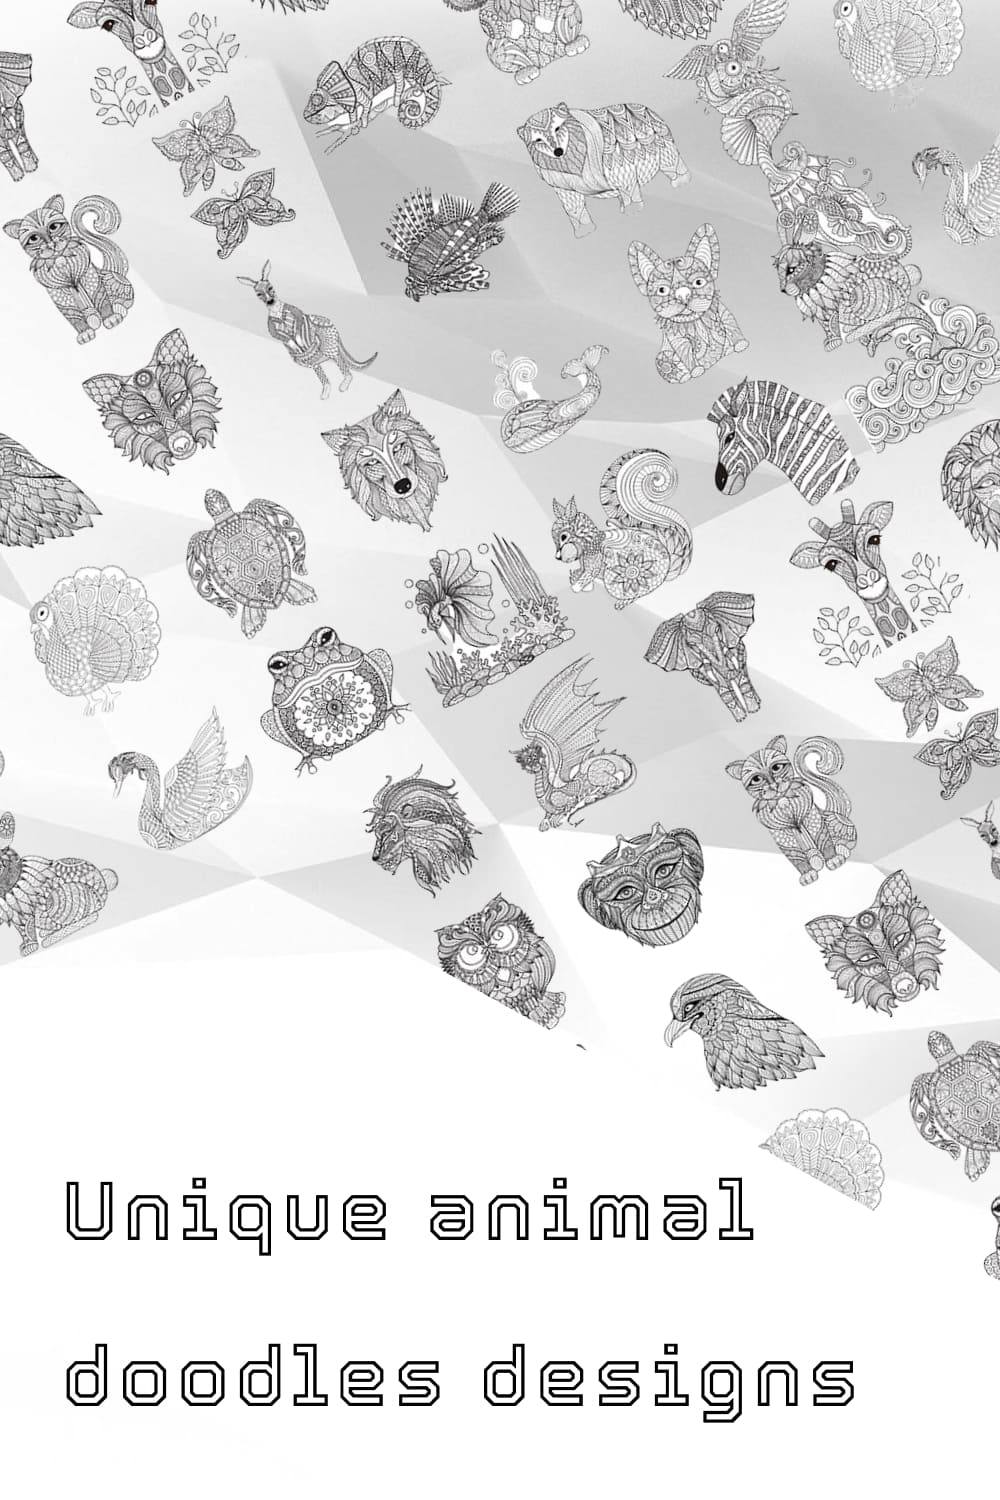 35 Unique Animal Doodles Designs.